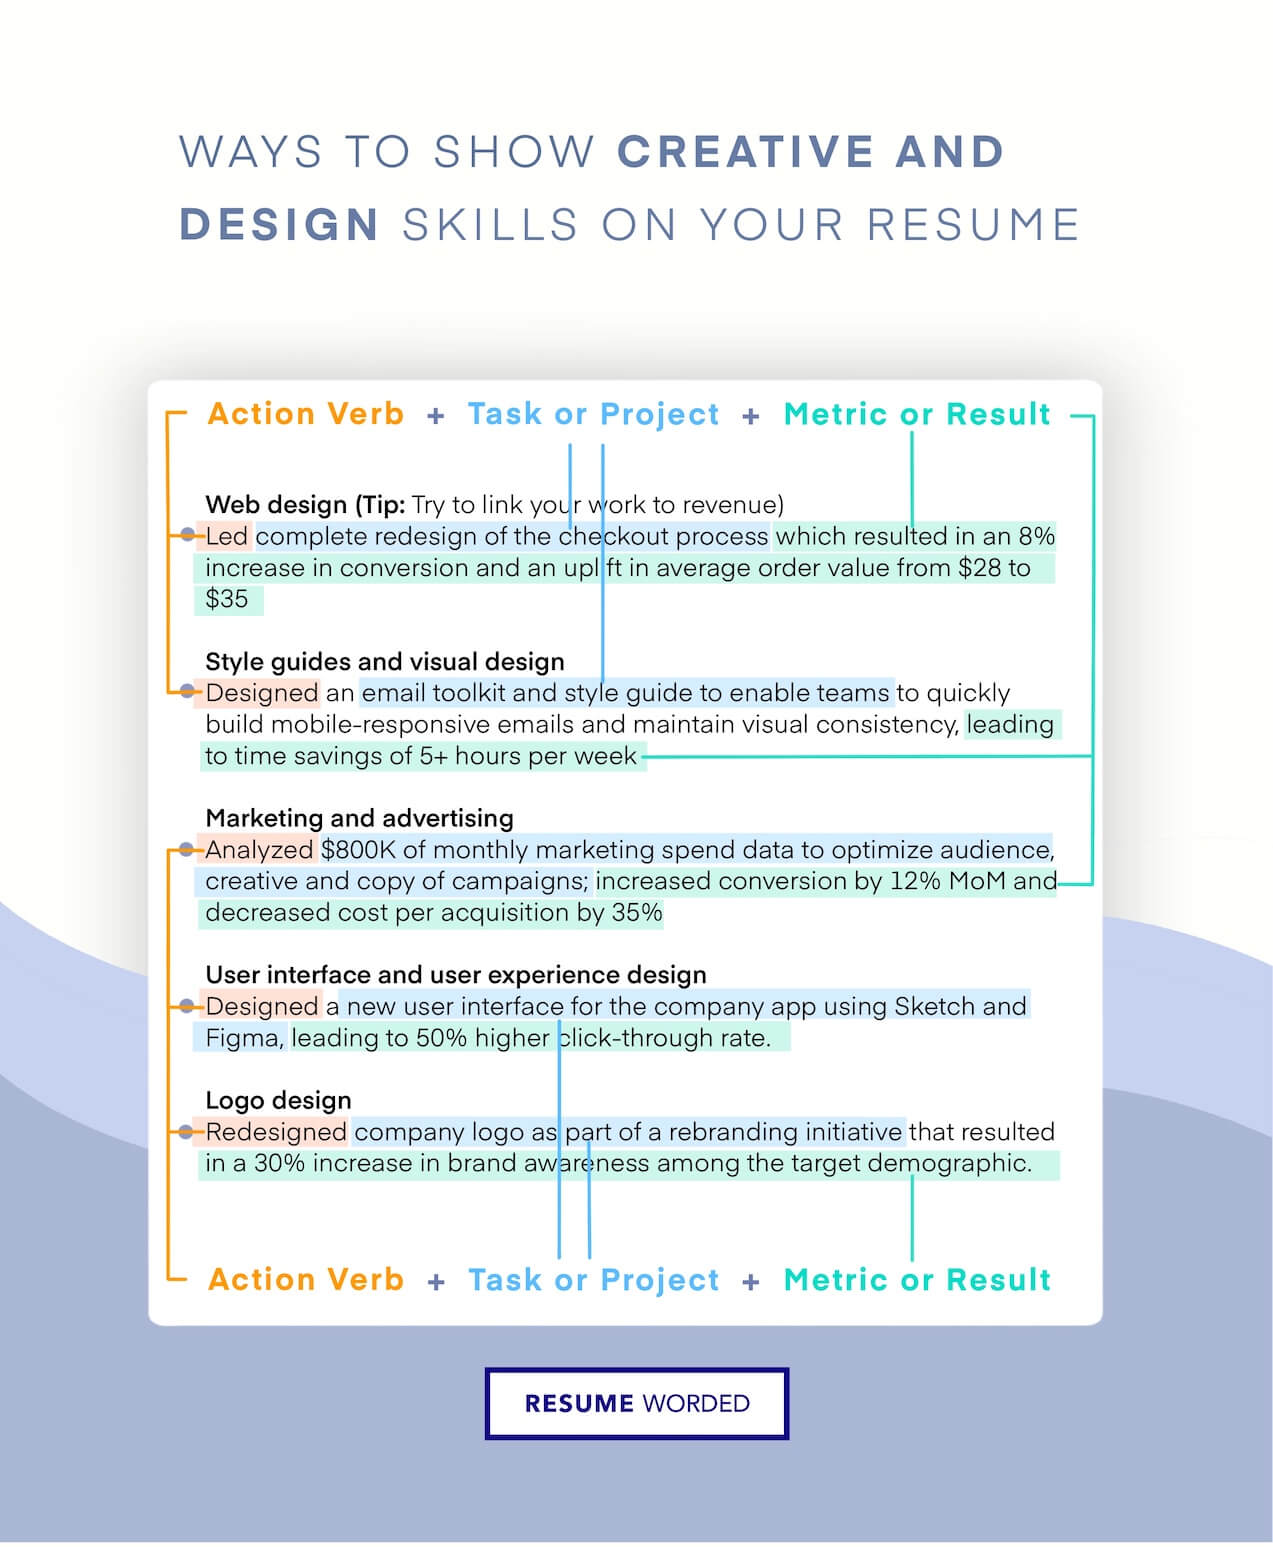 Display your soft skills creatively - Non Profit Volunteer CV